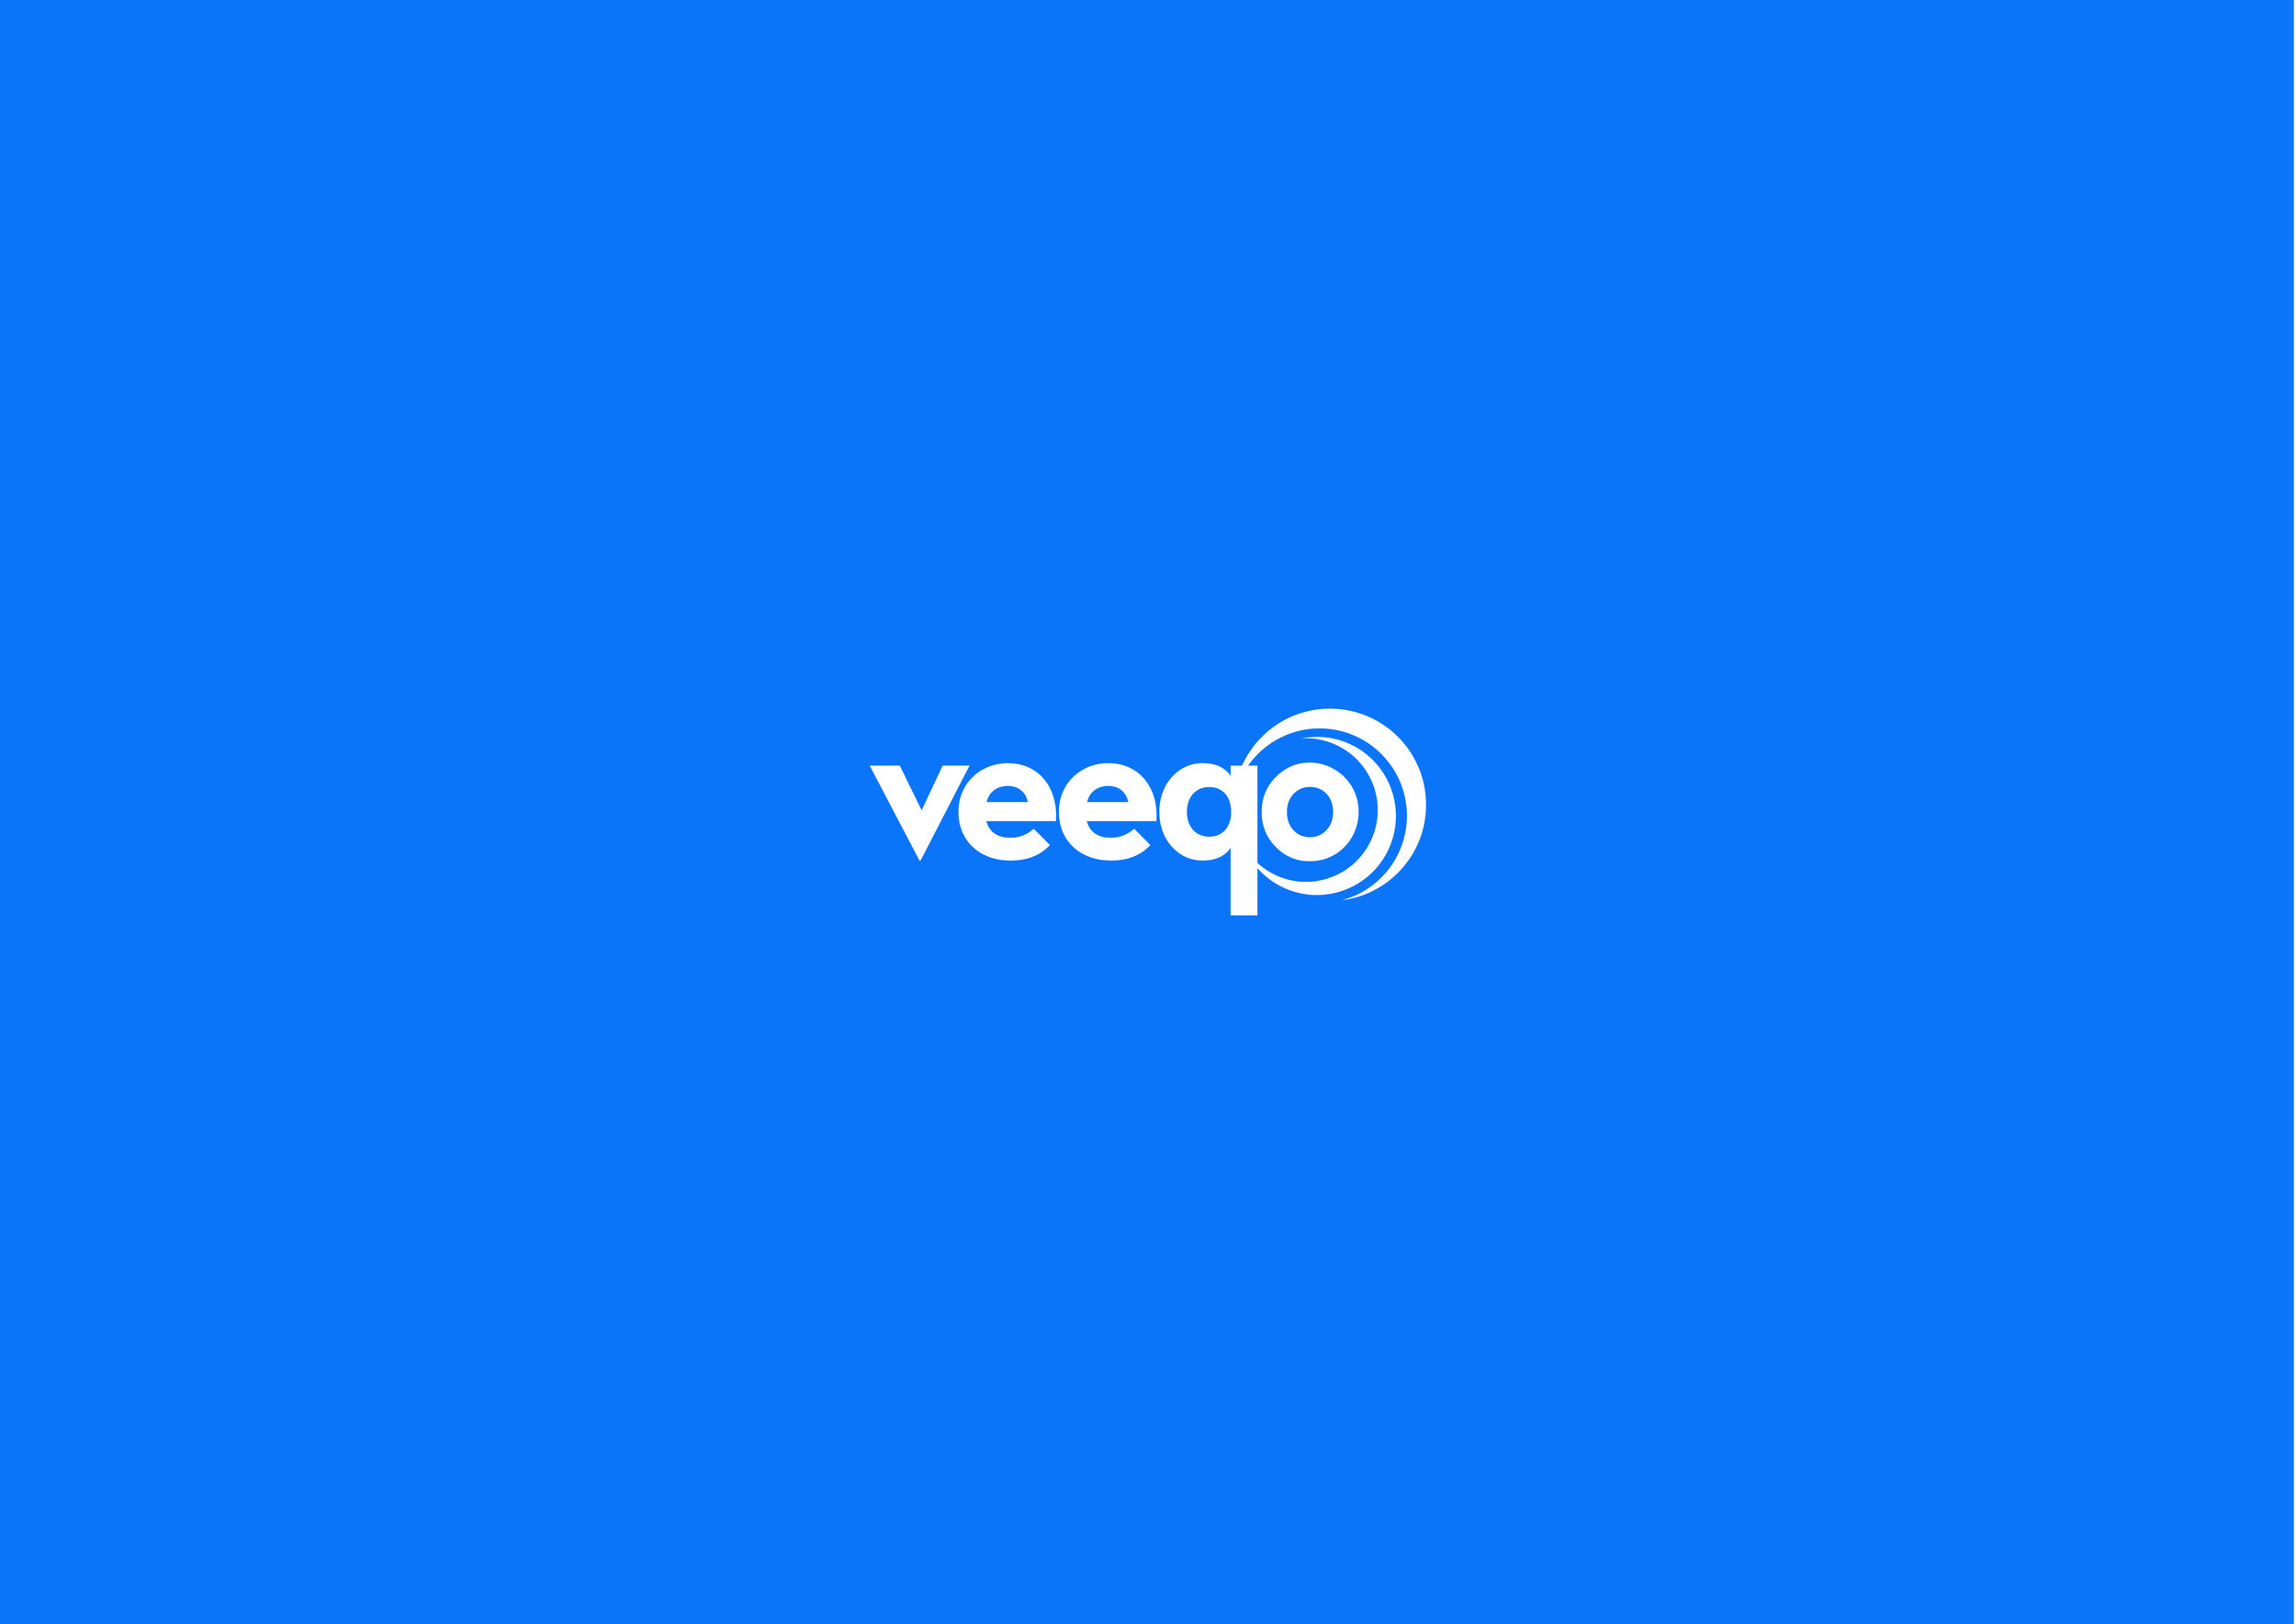 Branding Design - Veeqo company logo in blue background